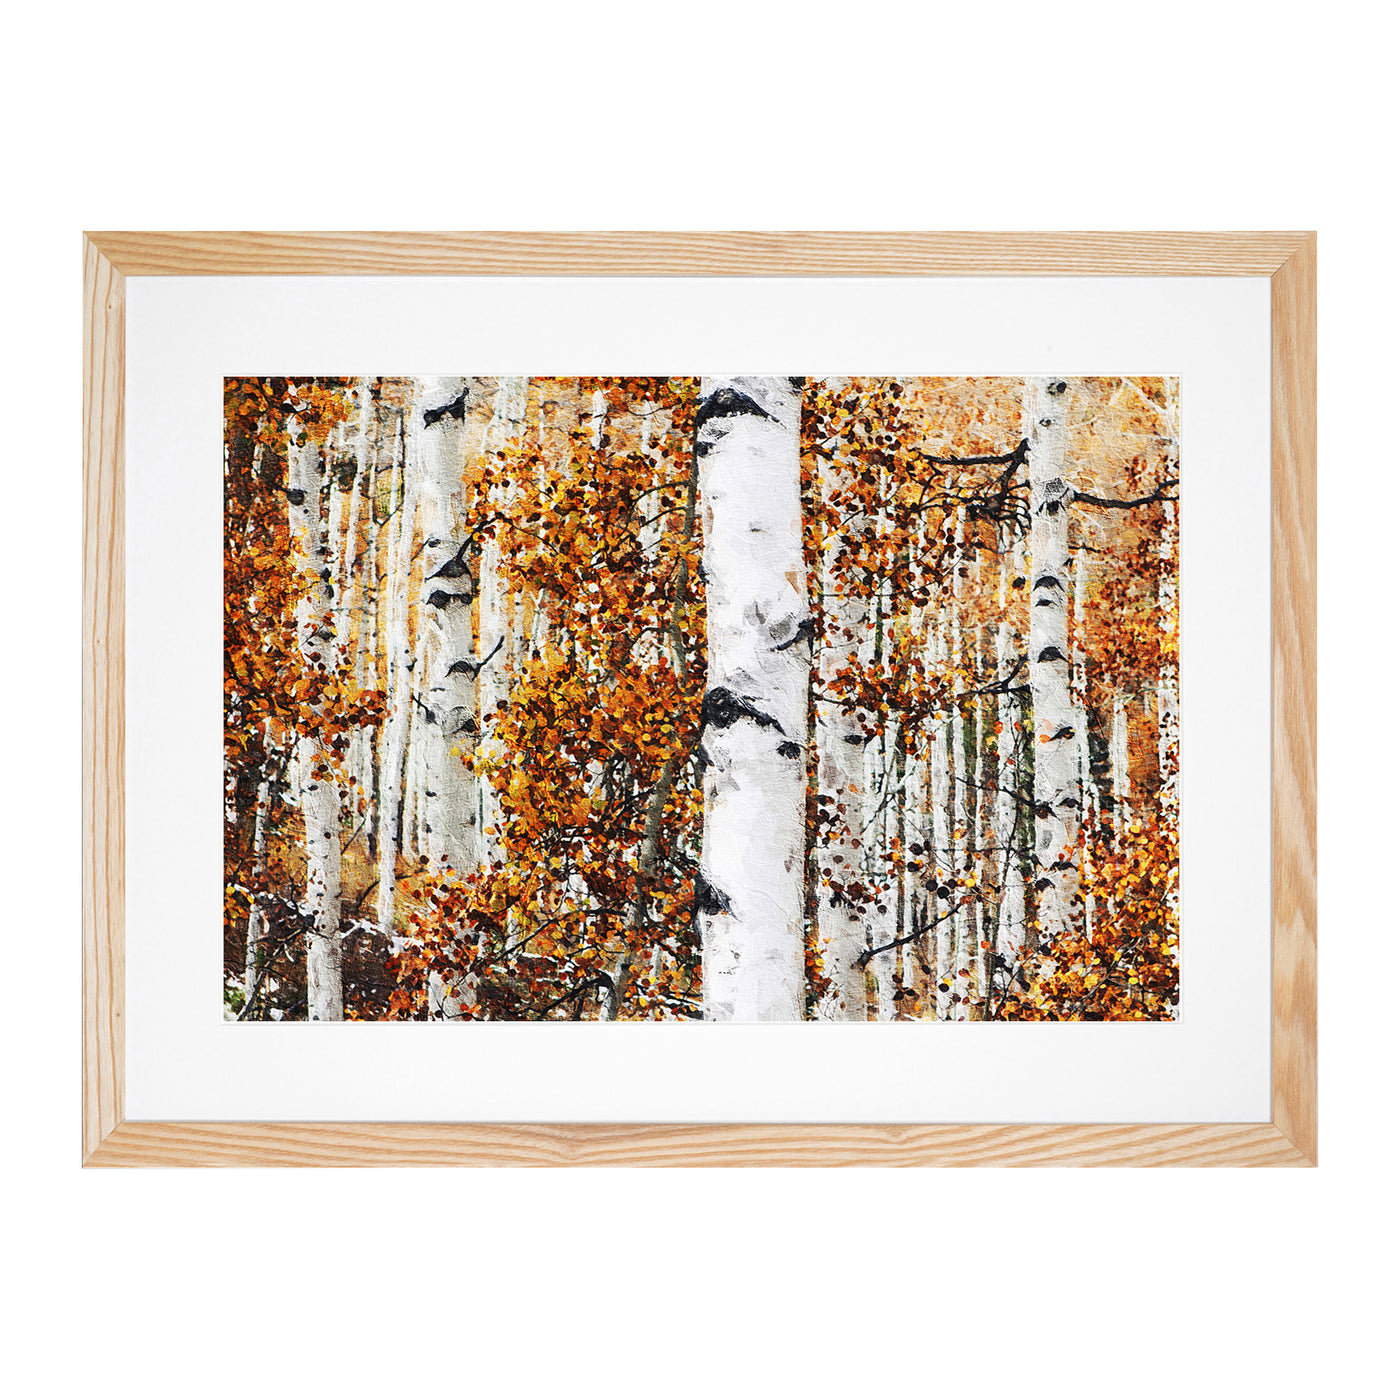 Birch Trees In Autumn